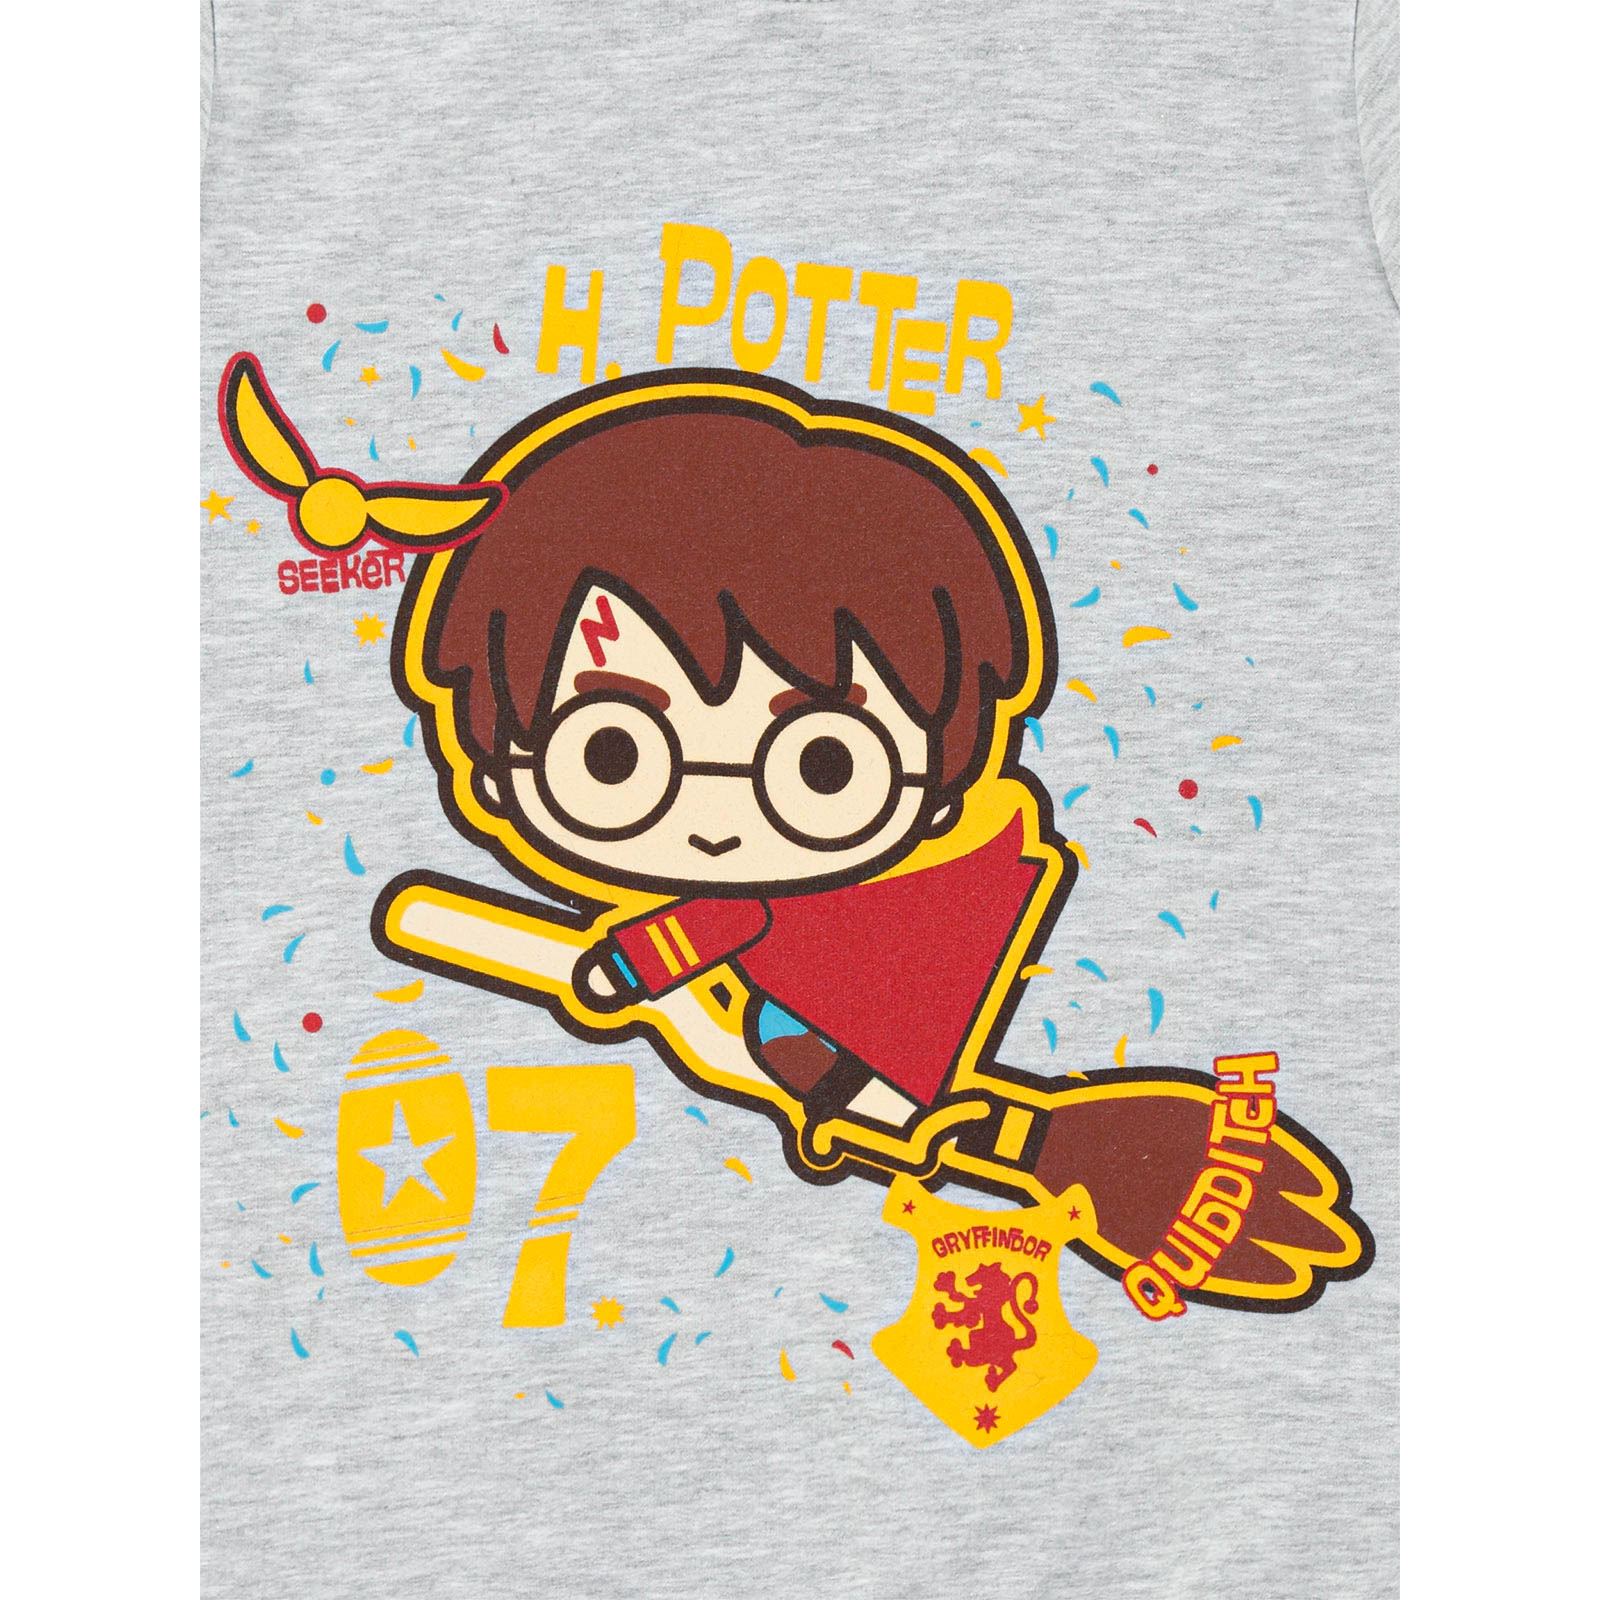 Harry Potter Erkek Çocuk Sweatshirt 2-5 Yaş Gri